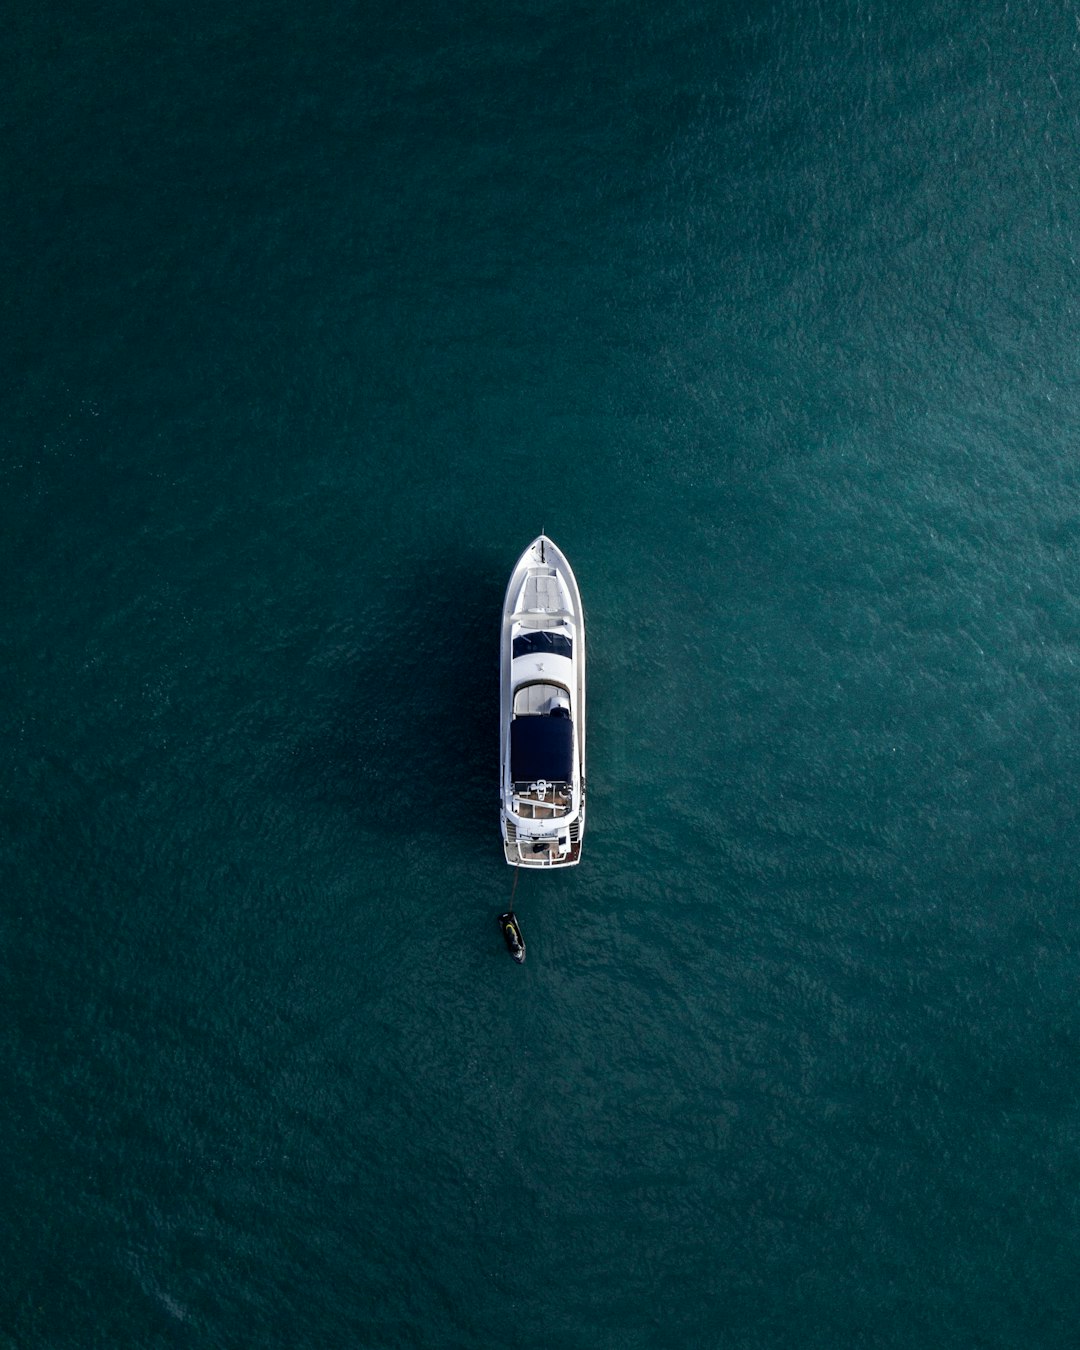 Bahamian Dreams: How to Charter Luxury Boats in the Bahamas